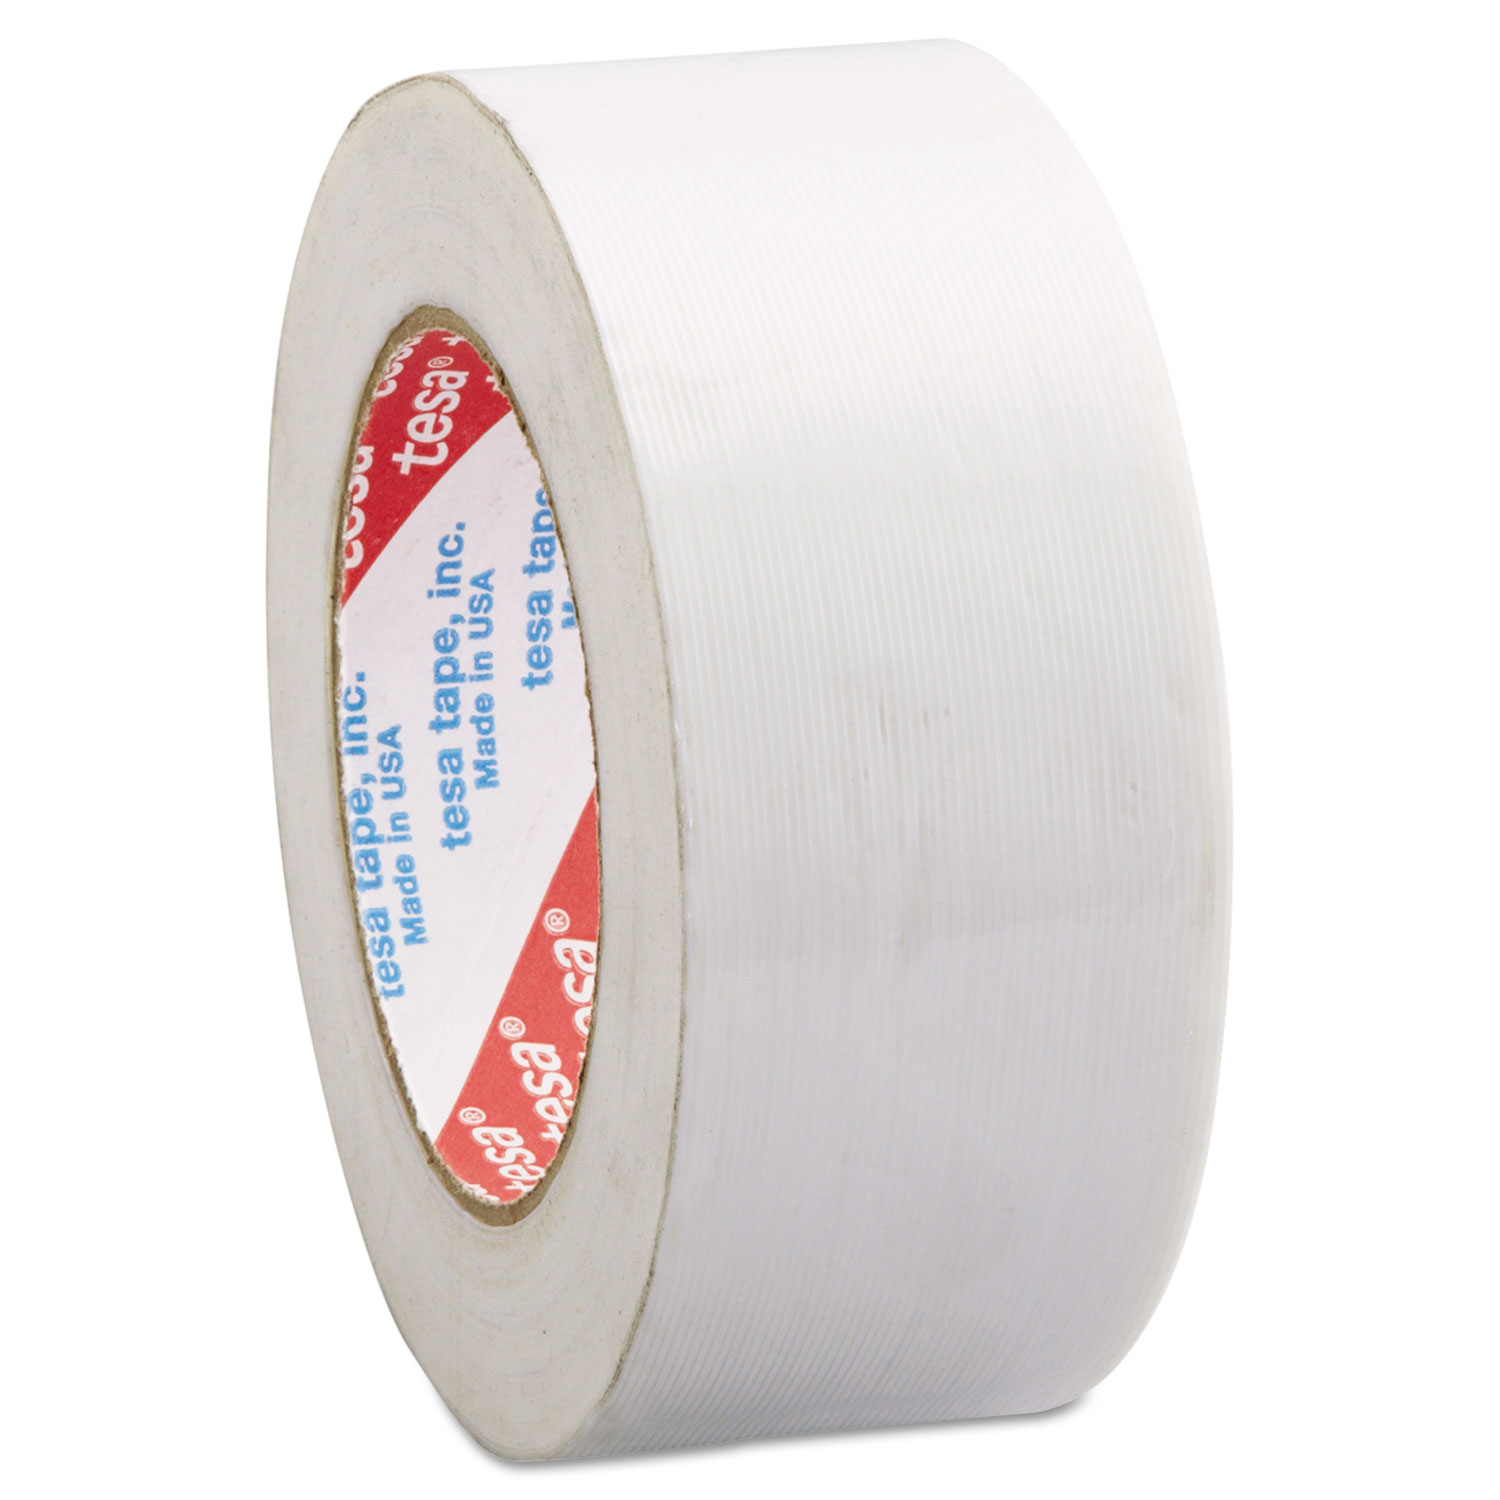 319 Performance Grade Filament Strapping Tape, 2 x 60yds, Fiberglass